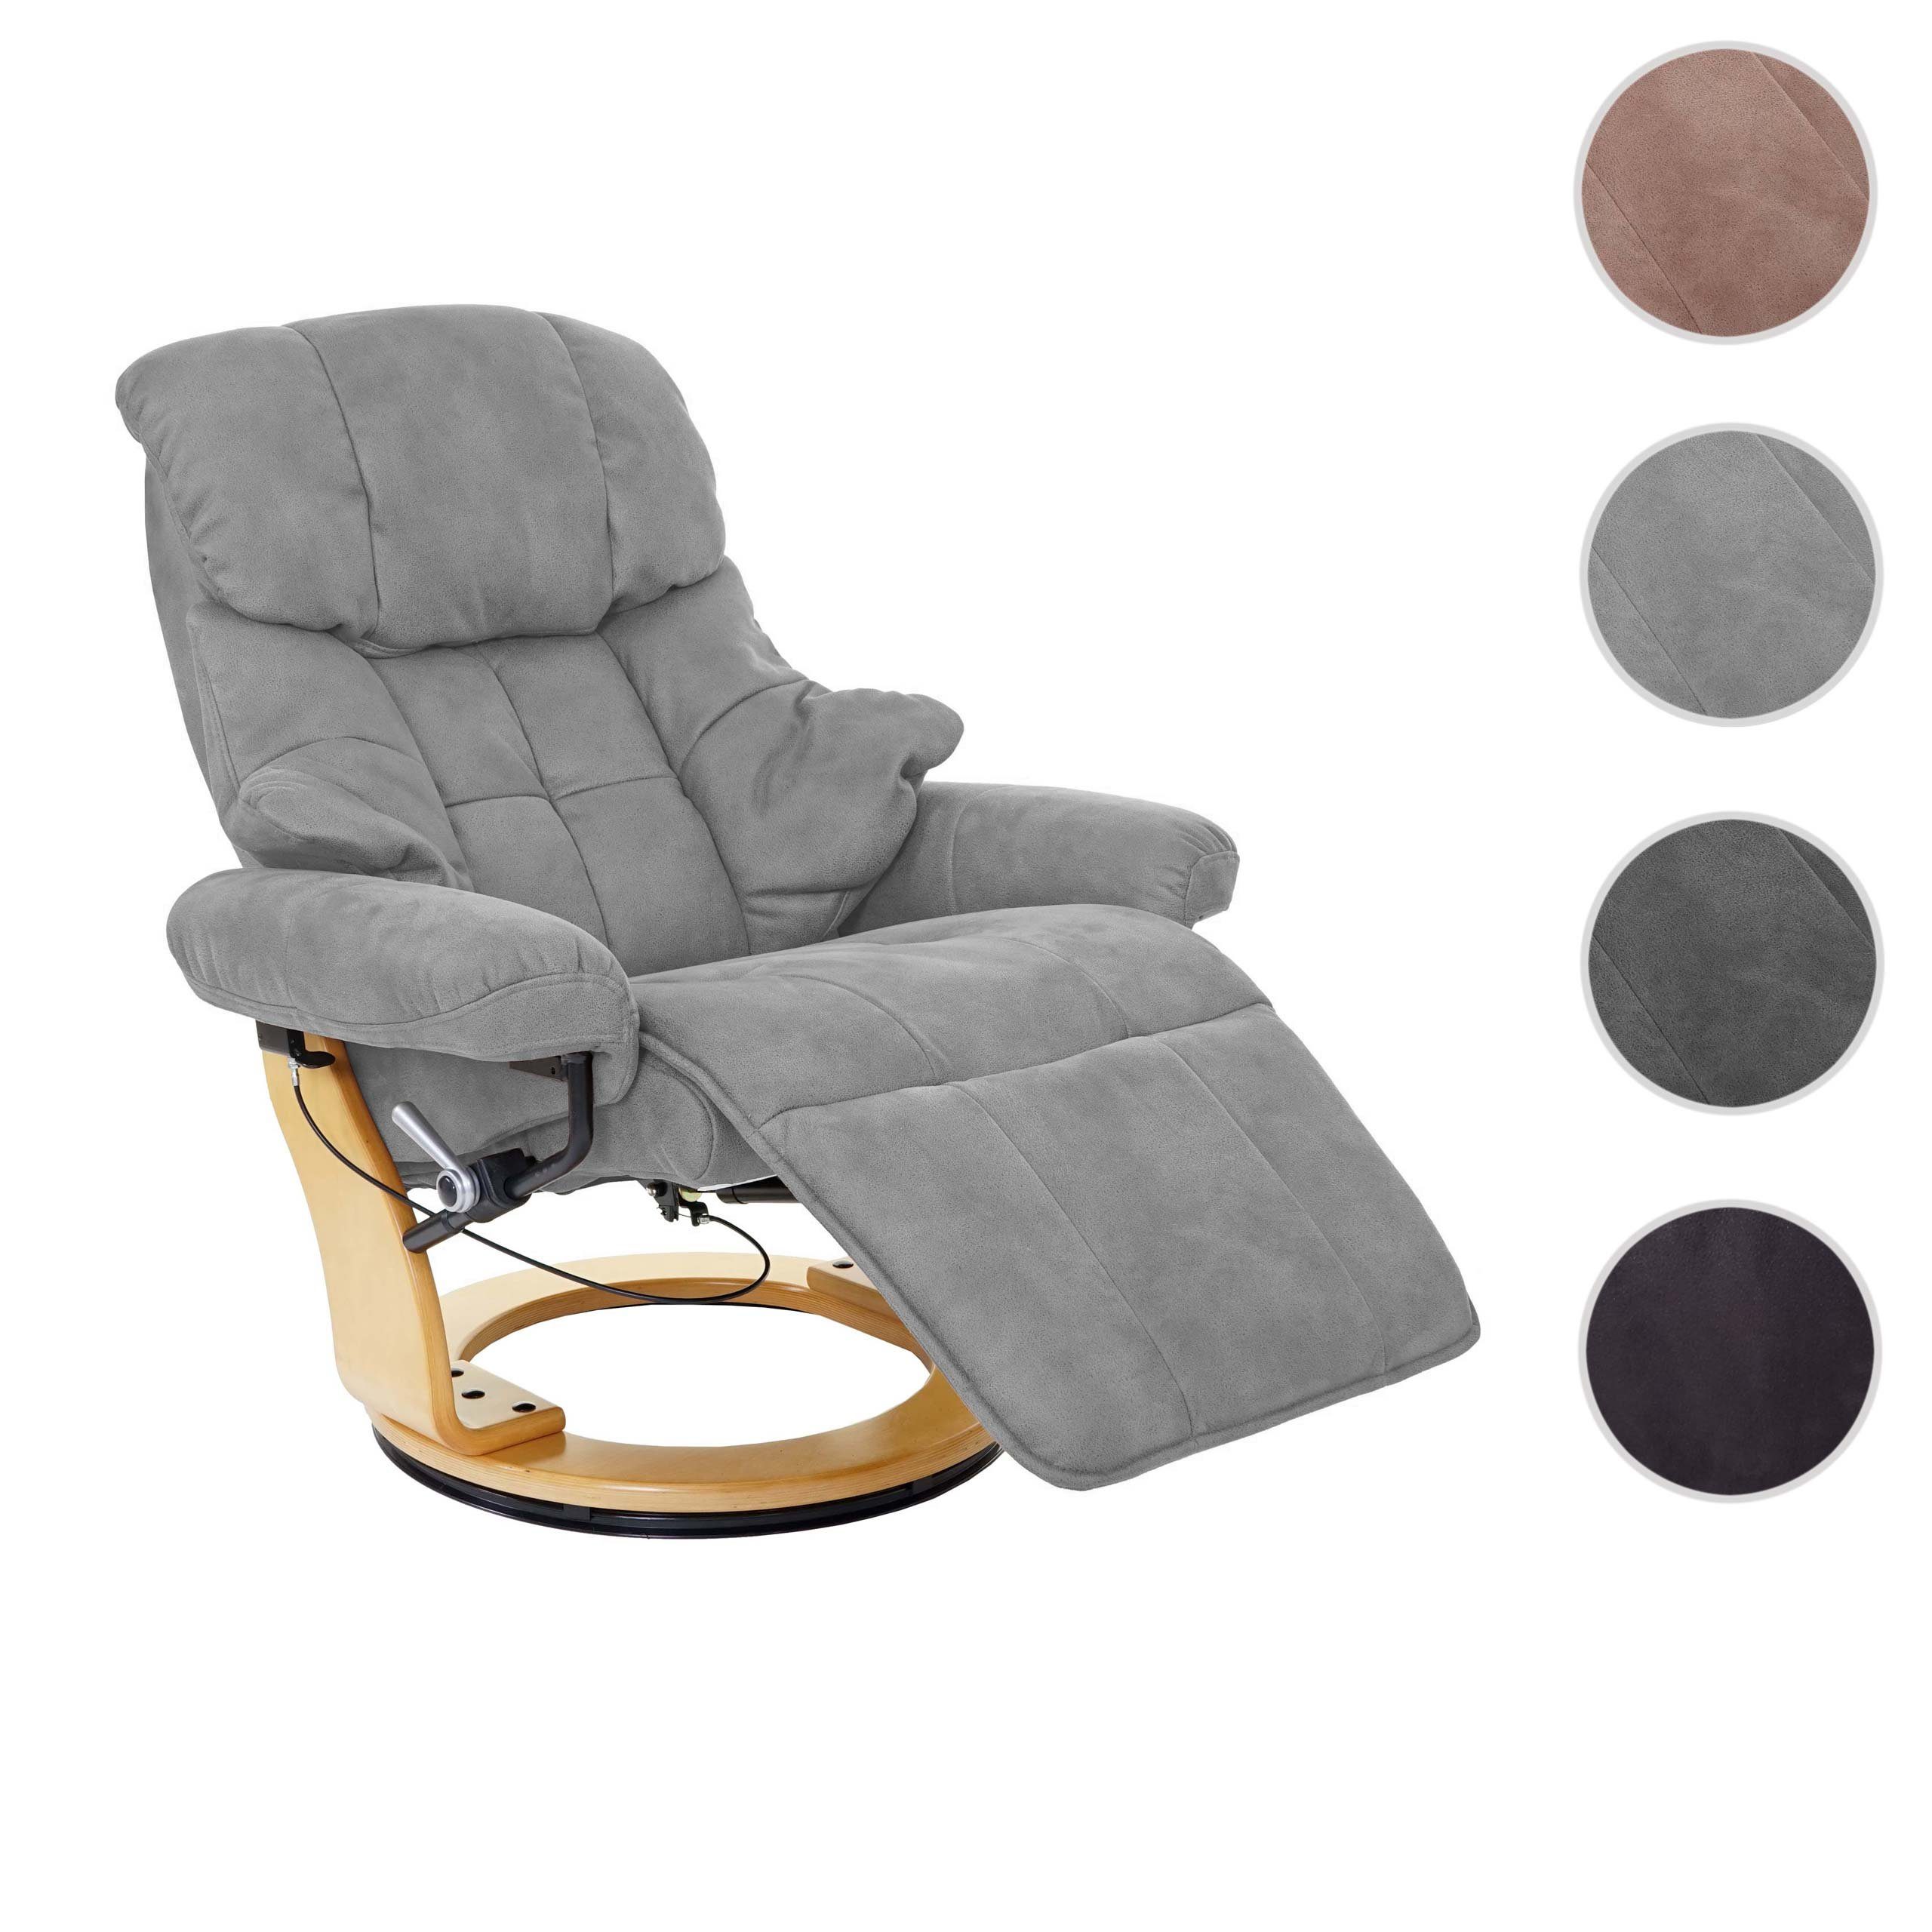 2-S, MCA Polsterung extradicke furniture Relaxsessel hellgrau, Windsor verstellbar, Fußstütze separat und Rückenlehne naturbraun